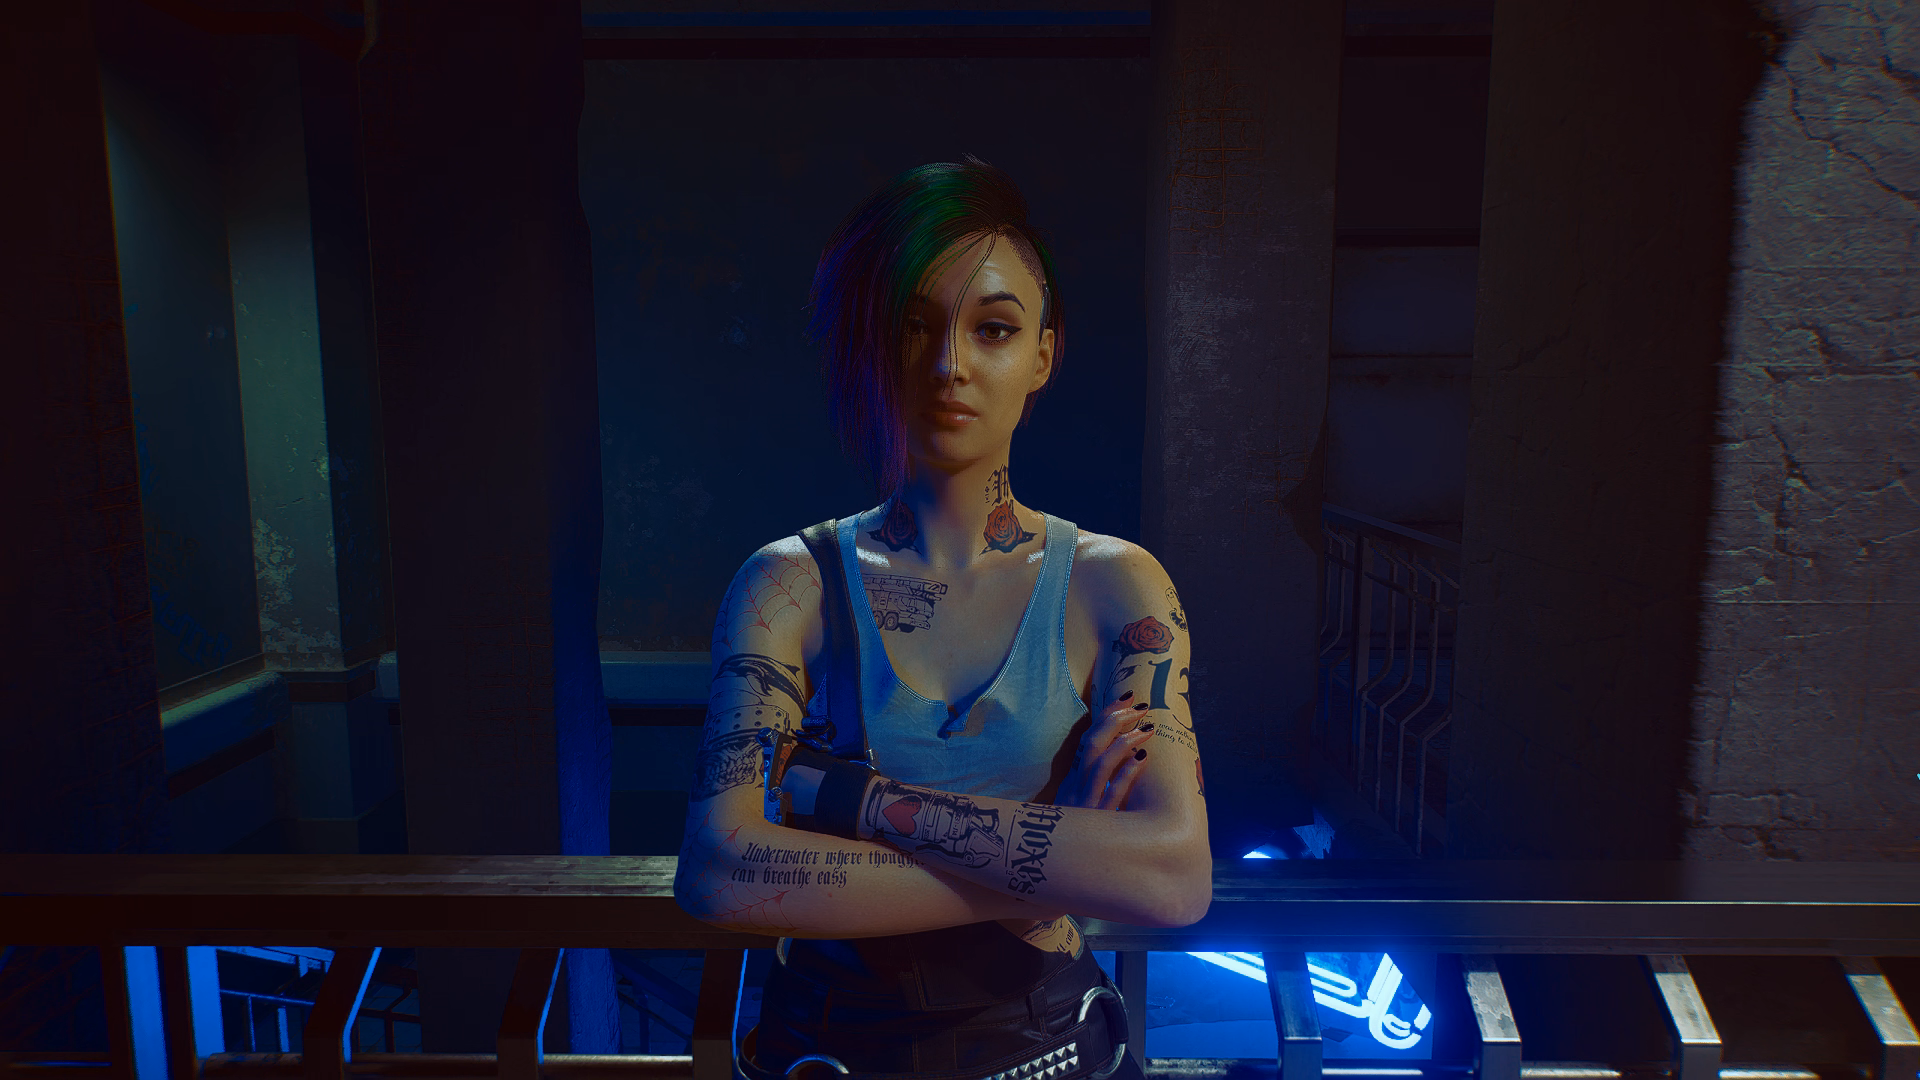 Cyberpunk 2077 Ray Tracing Judy Alvarez Blue Light Building Screen Shot Tattoo White Tank Top Black  1920x1080